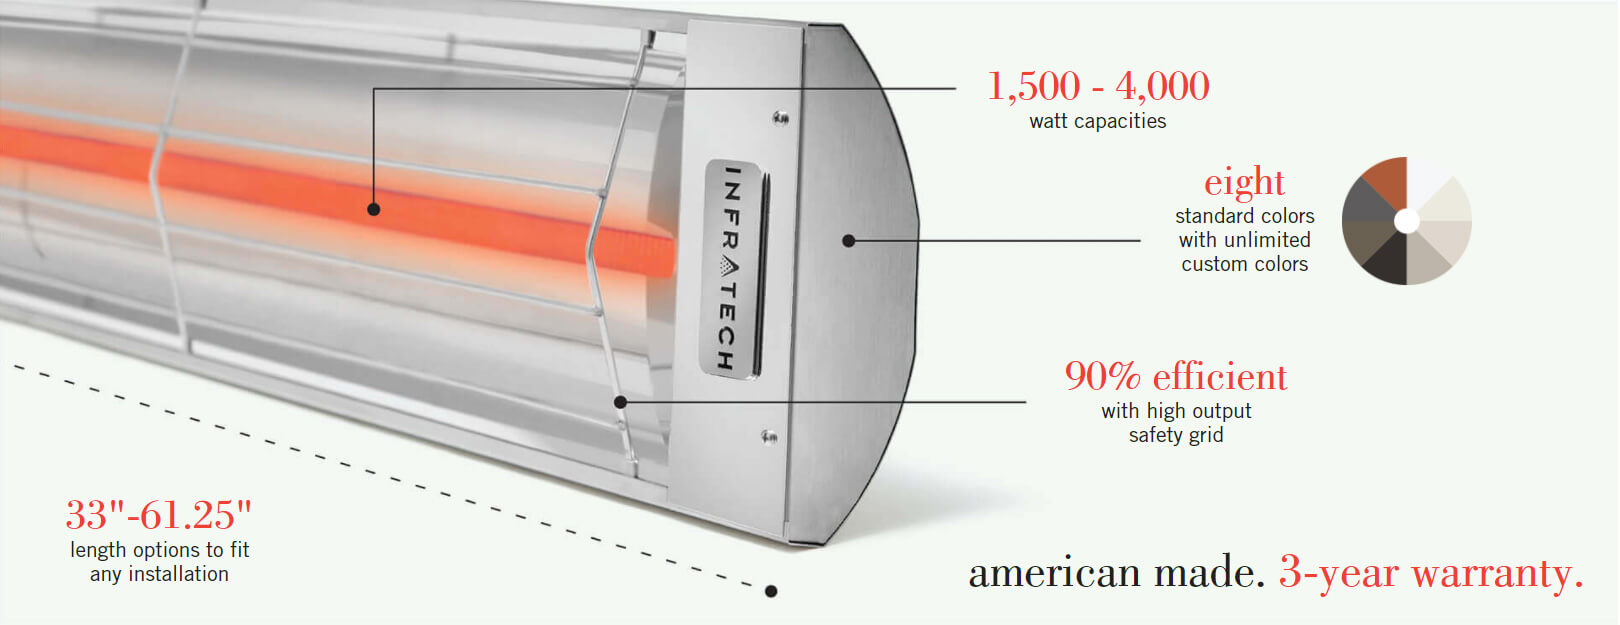 Infratech Comfort 61 1/4" 4000 Watt C Series Single Element Heater